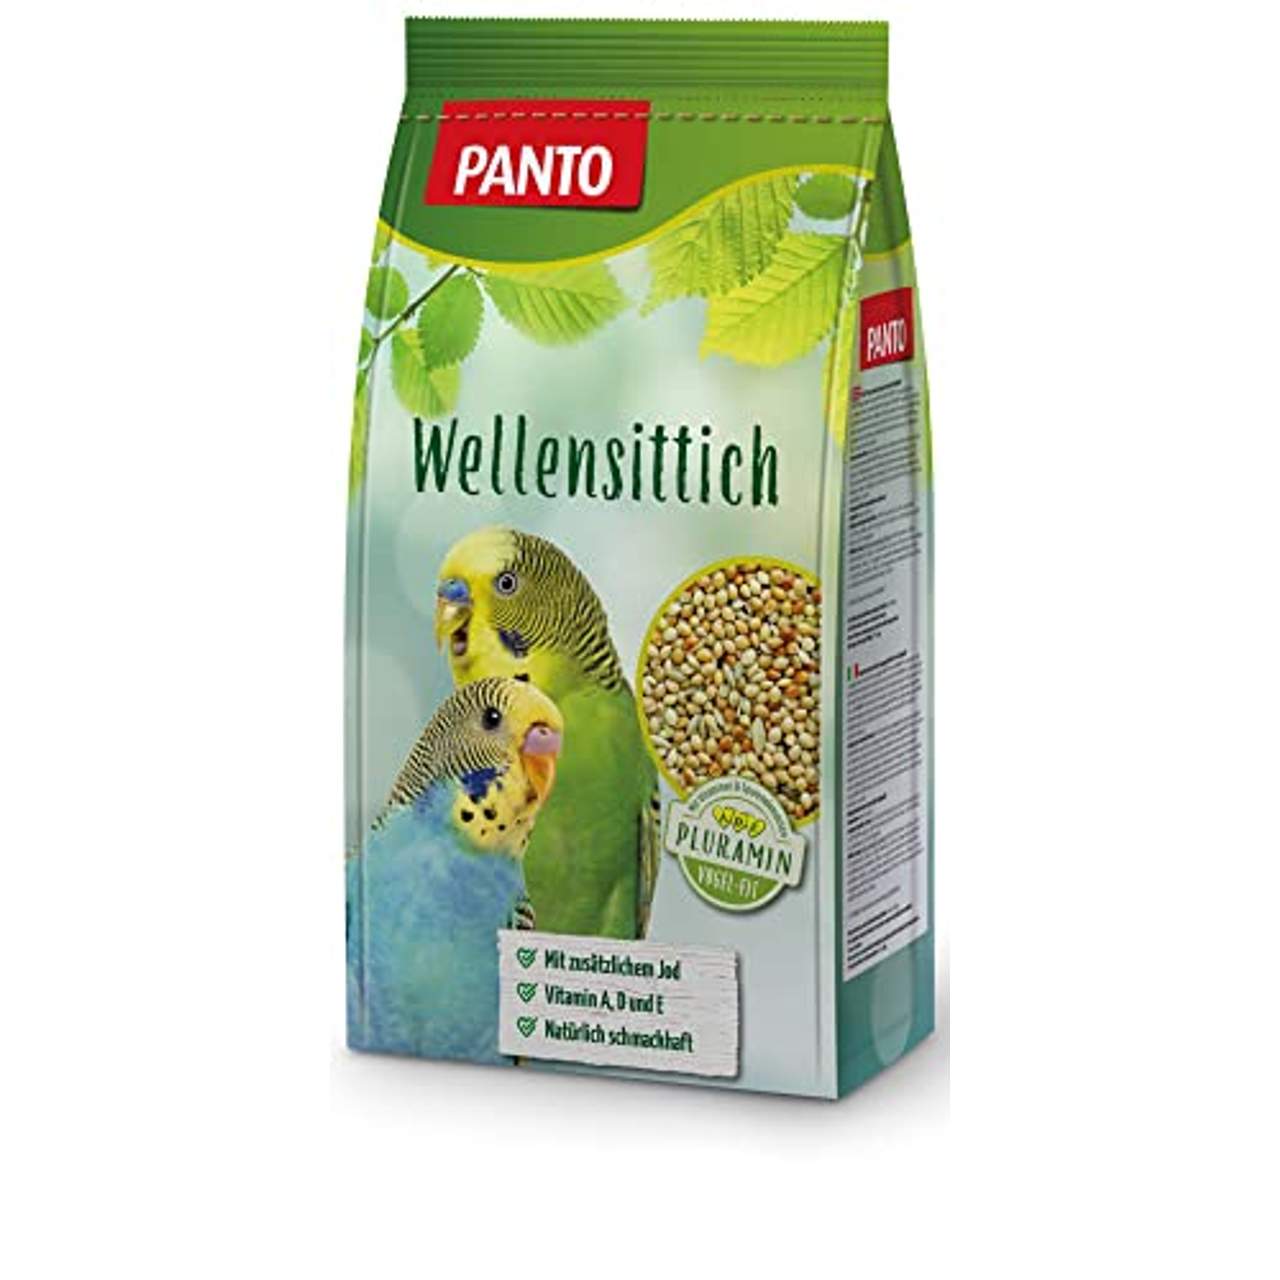 Panto Wellensittichfutter 5er Pack